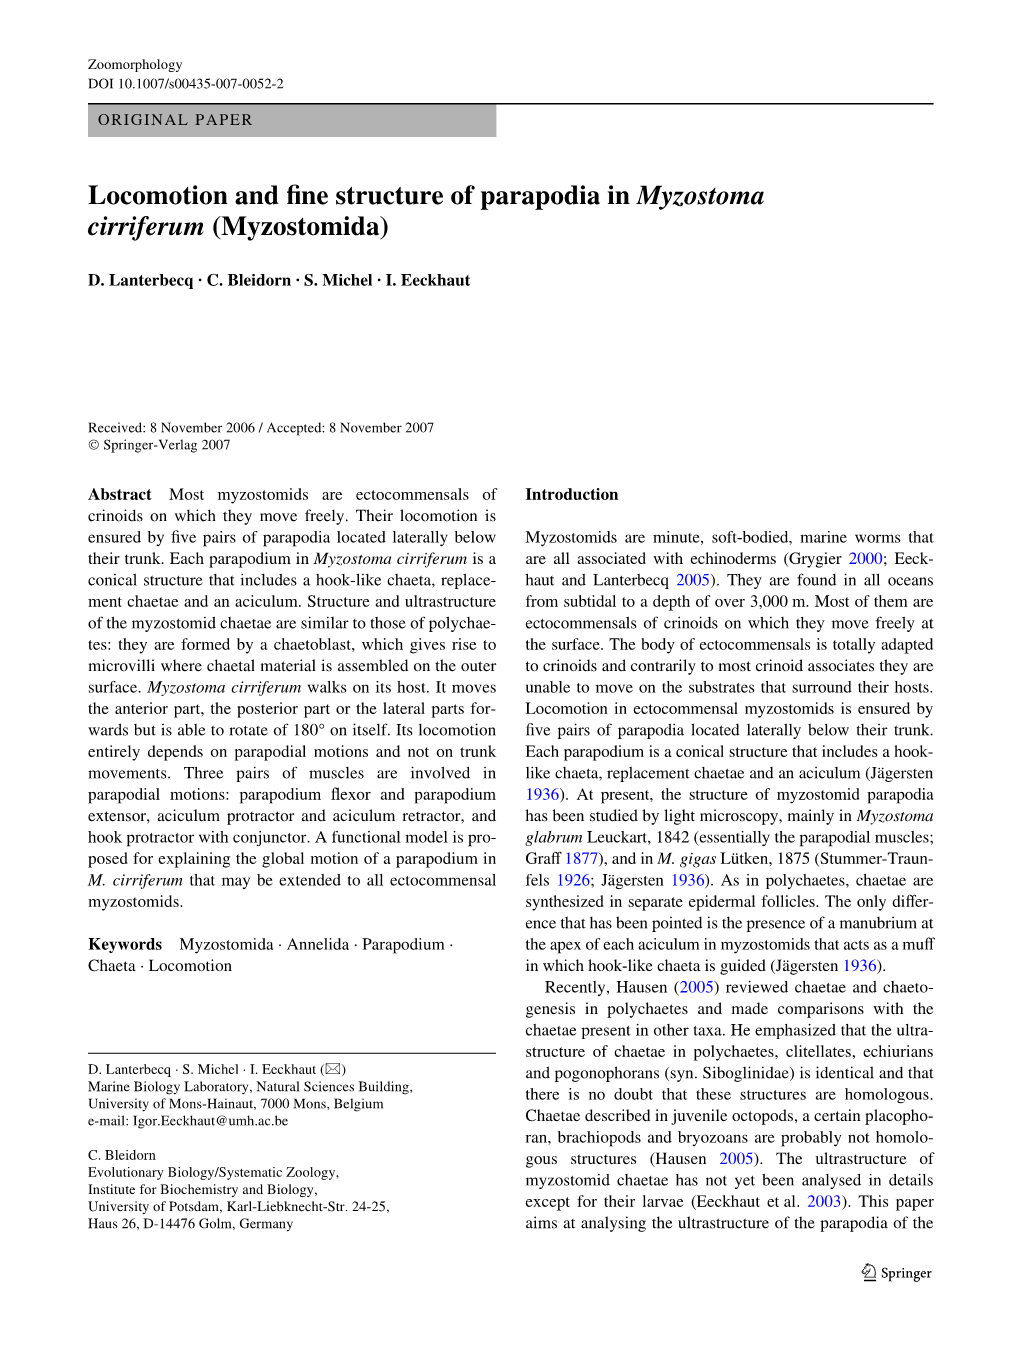 Locomotion and Wne Structure of Parapodia in Myzostoma Cirriferum (Myzostomida)